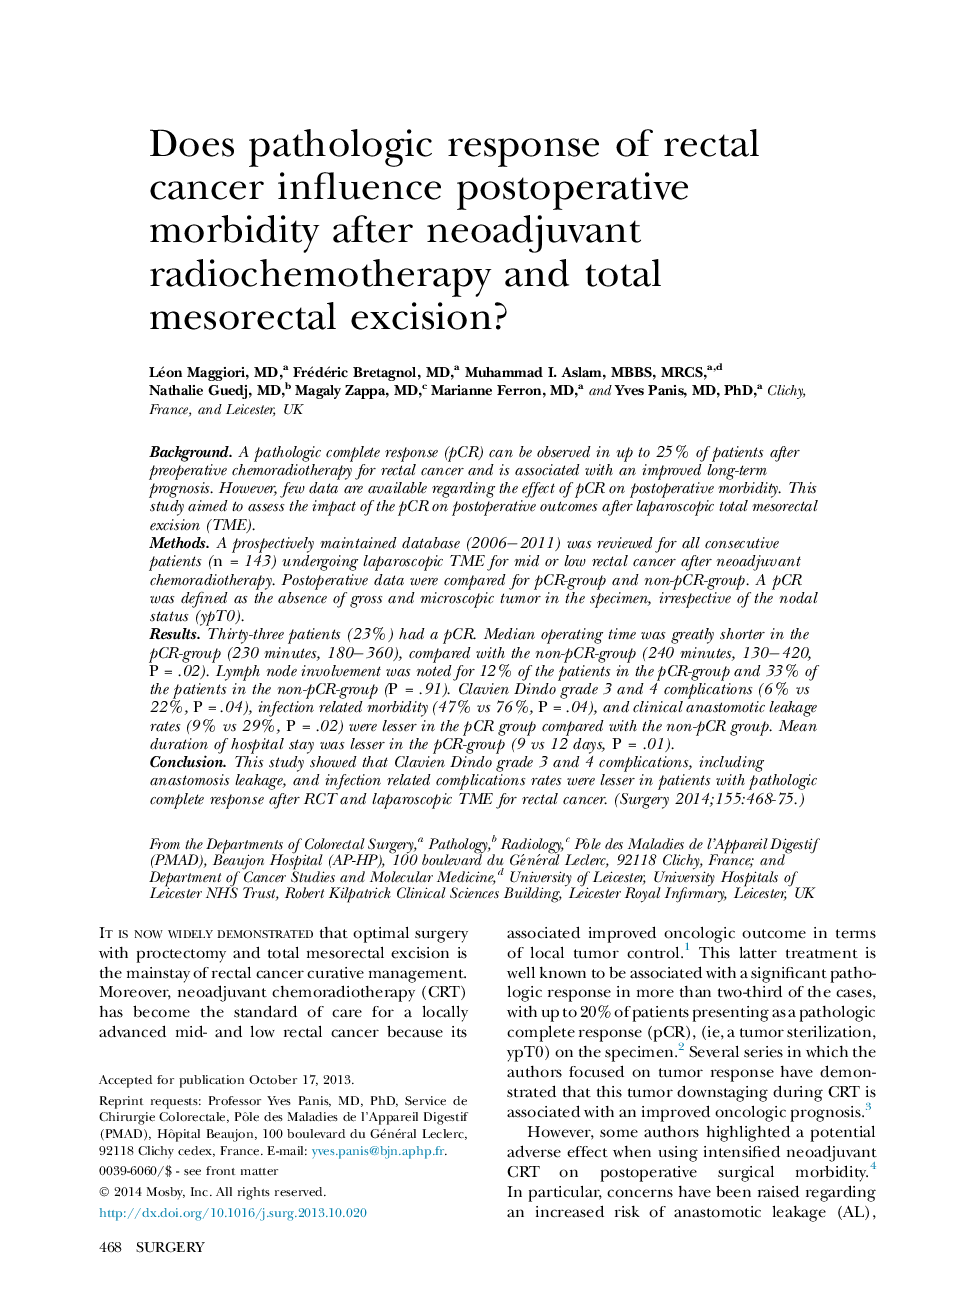 Original CommunicationDoes pathologic response of rectal cancer influence postoperative morbidity after neoadjuvant radiochemotherapy and total mesorectal excision?